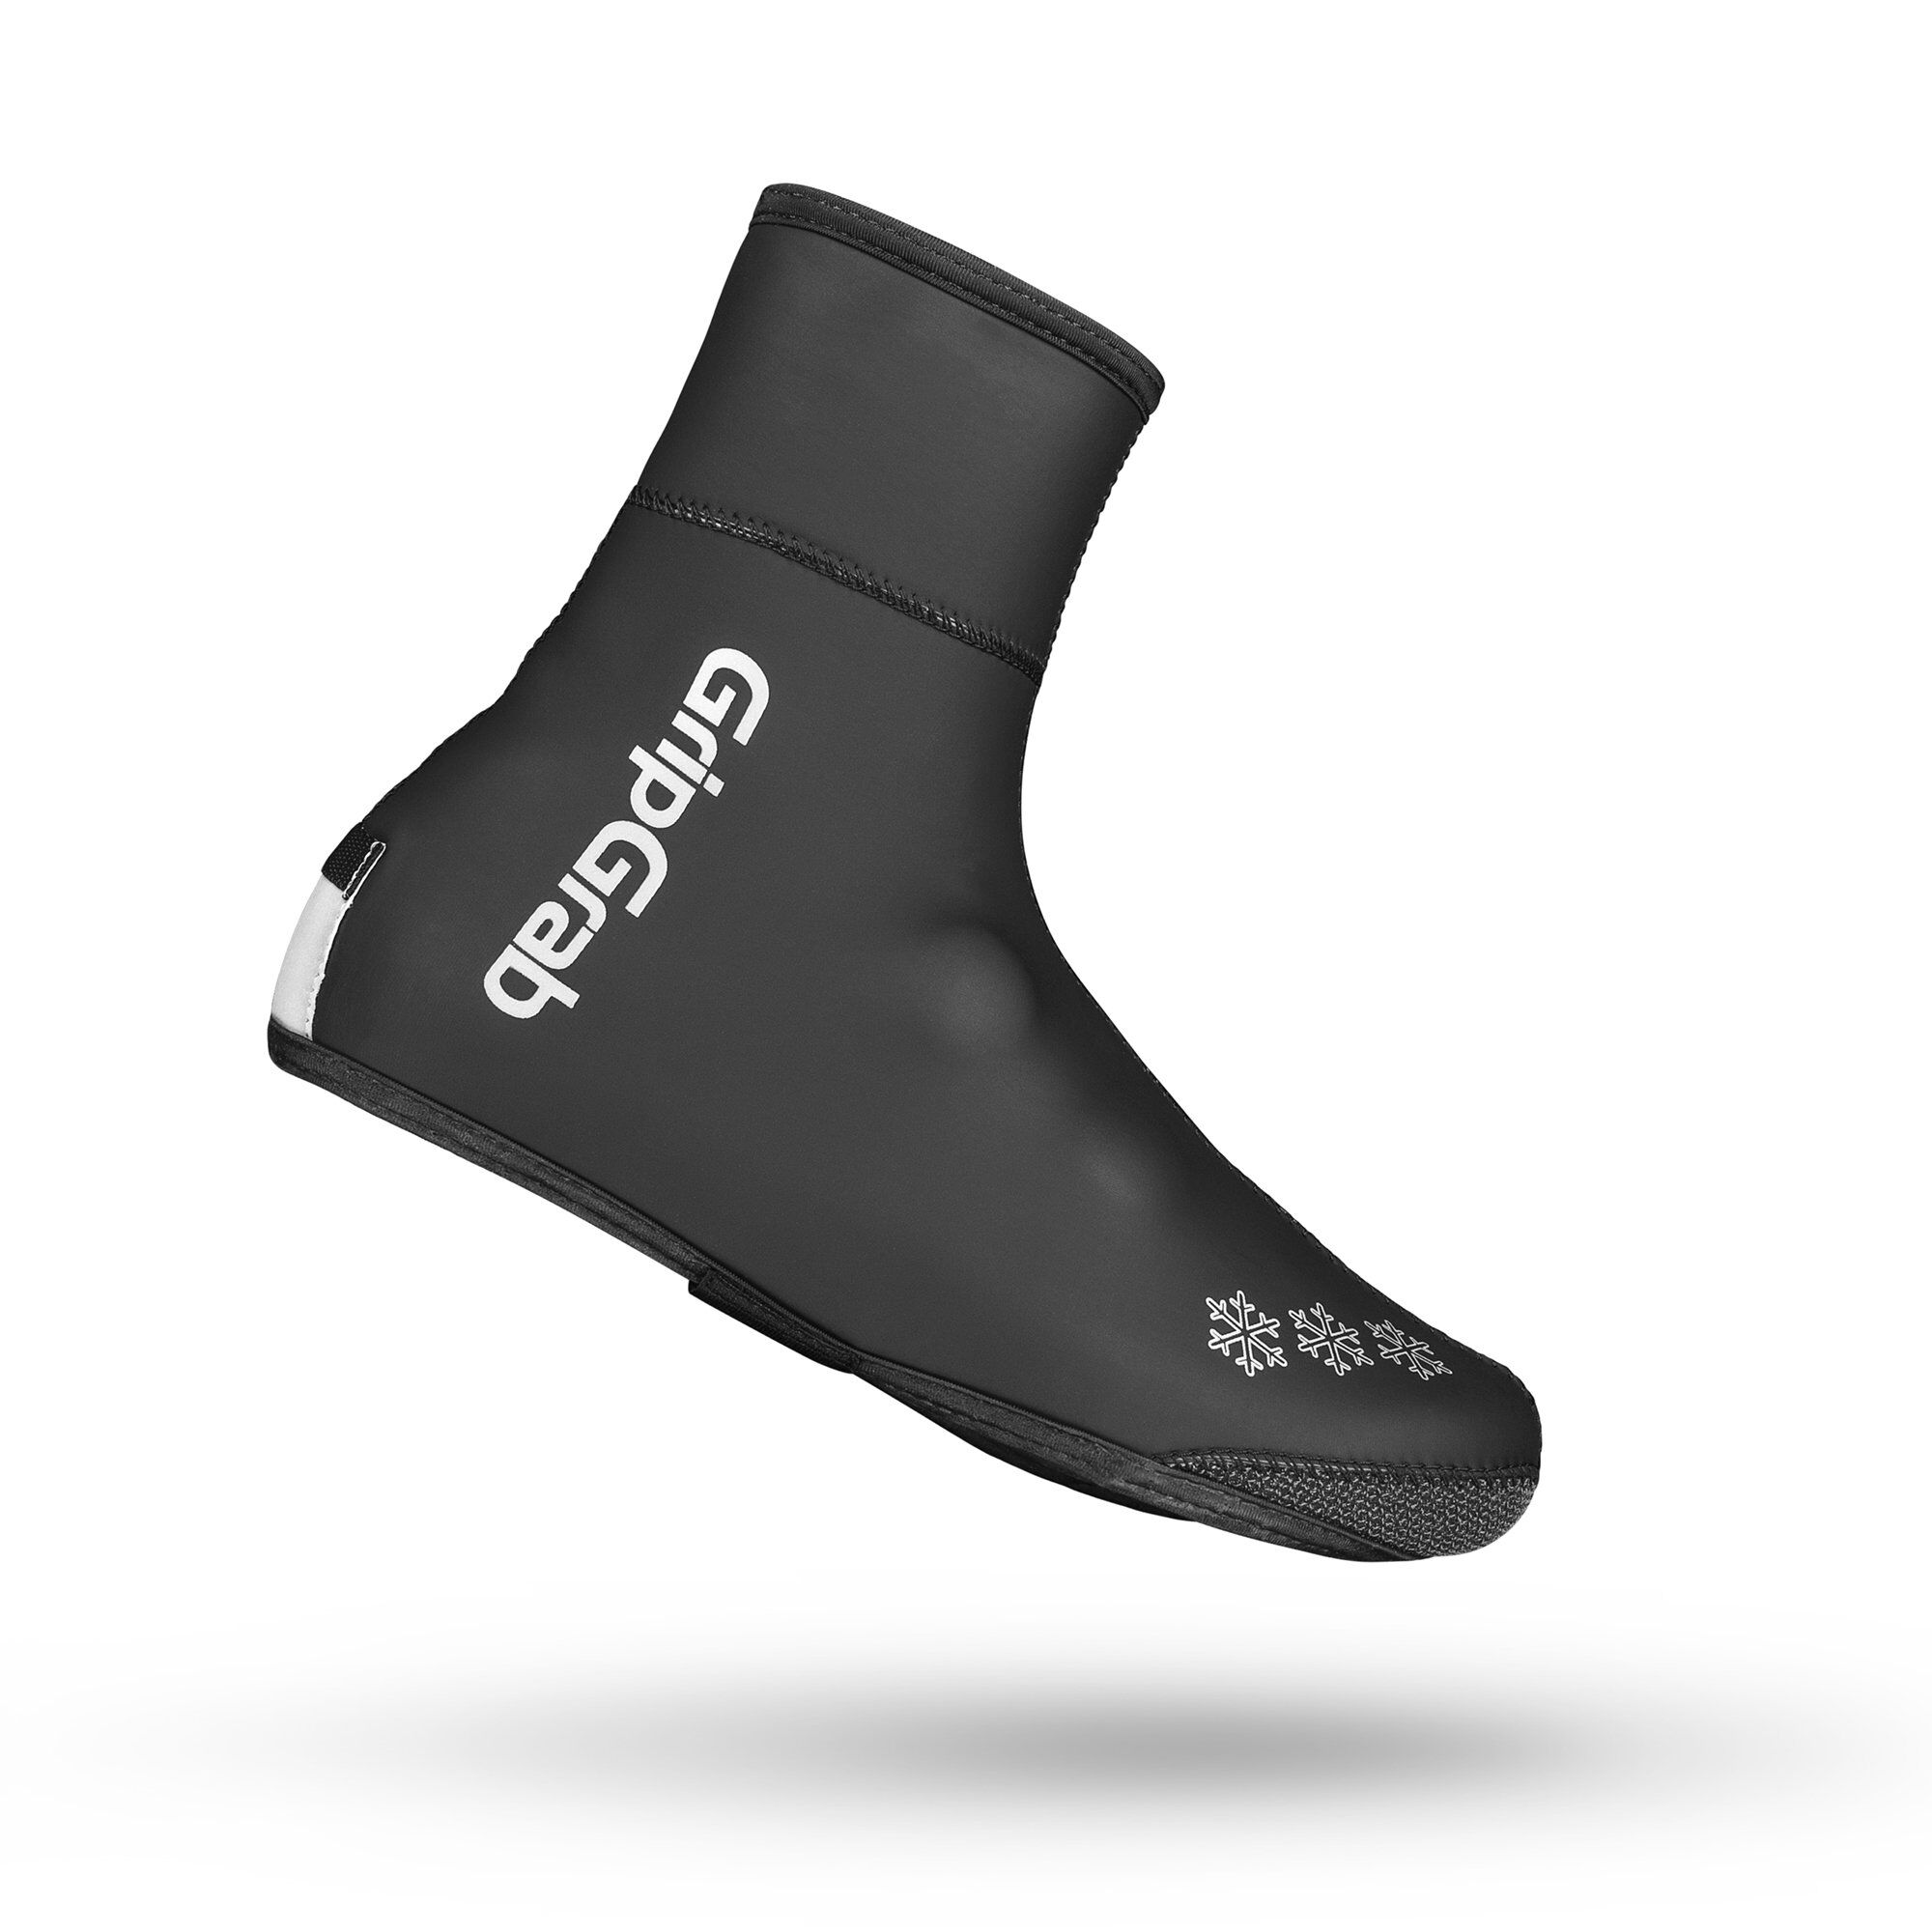 Grip Grab Arctic Waterproof Deep Winter Shoe Cover - Fahrrad Überschuhe